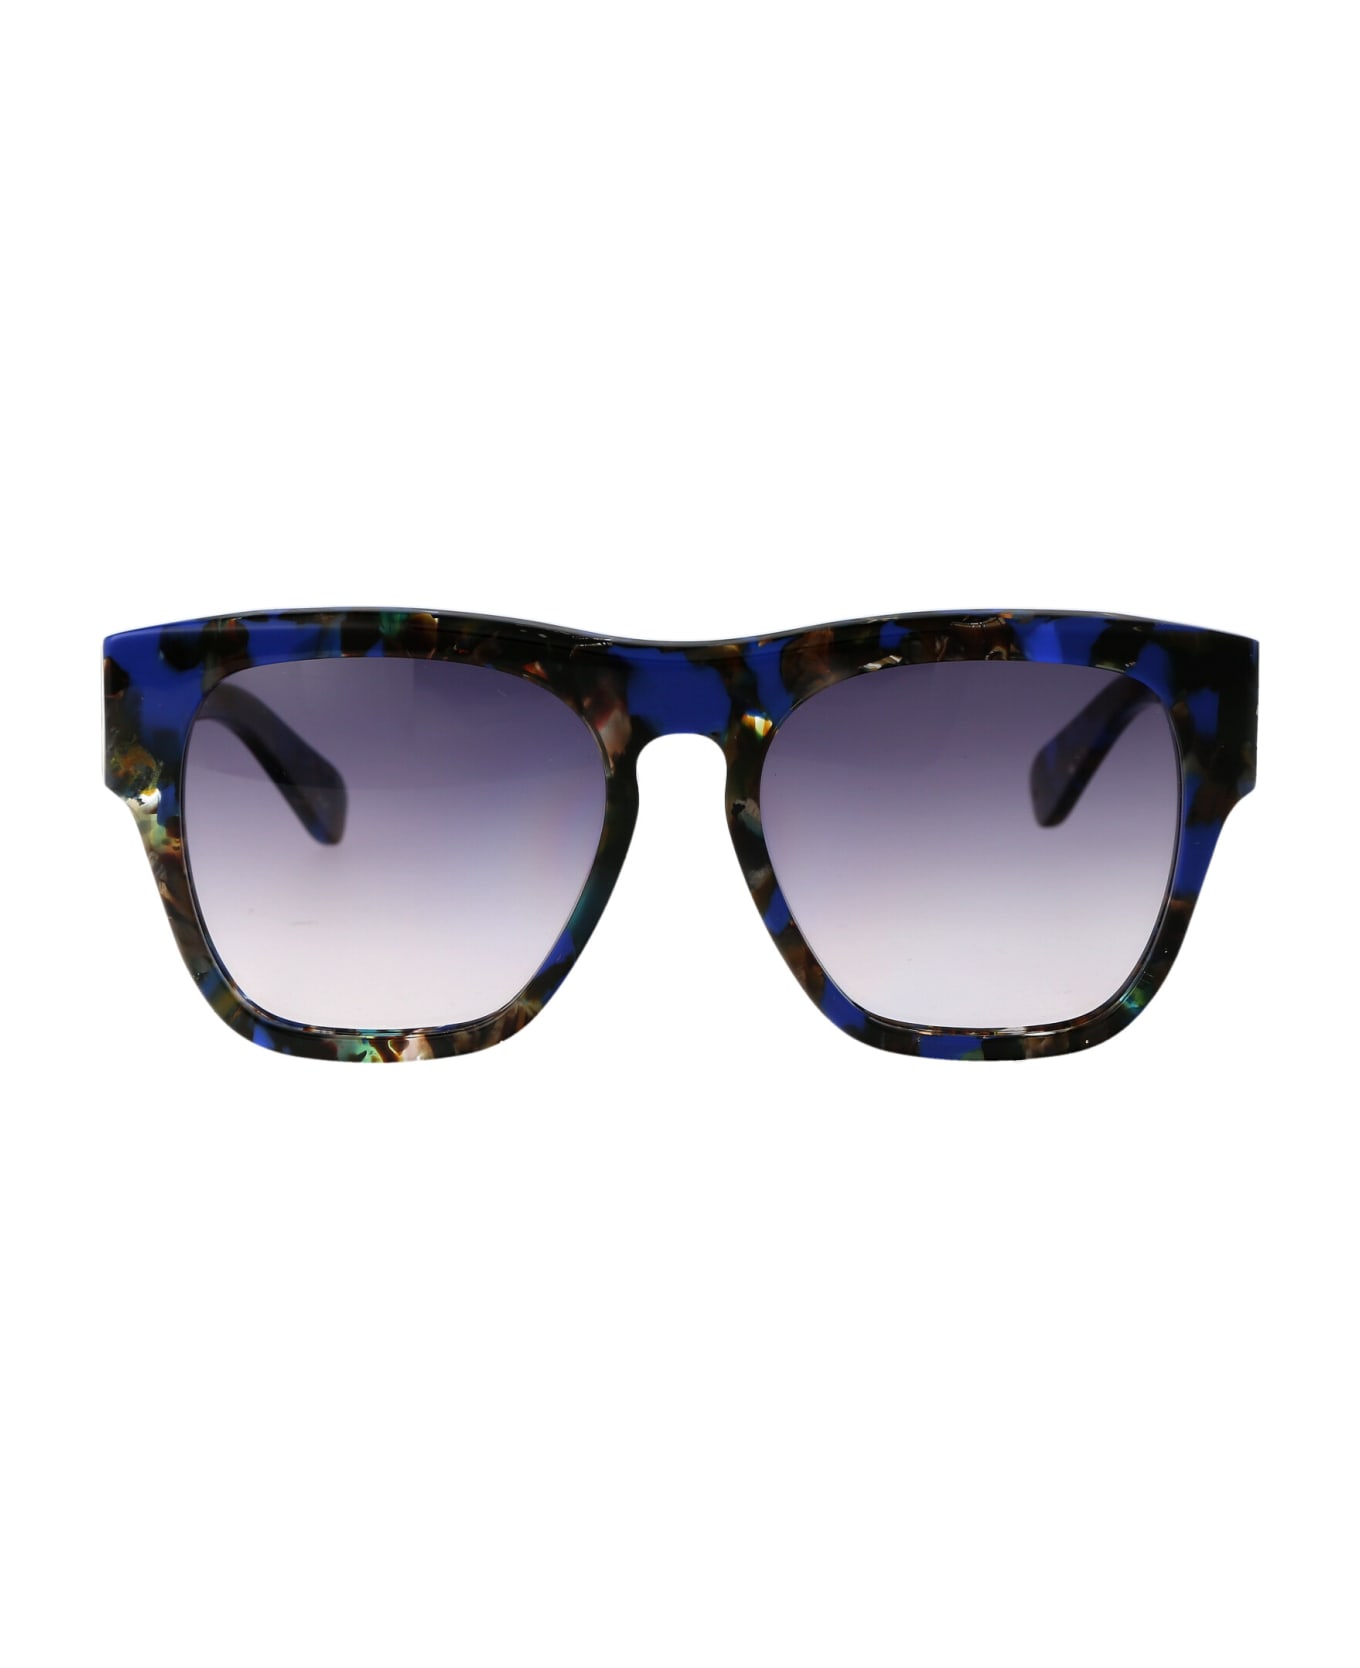 Chloé Eyewear Ch0149s Sunglasses - 008 BLUE BLUE BLUE サングラス